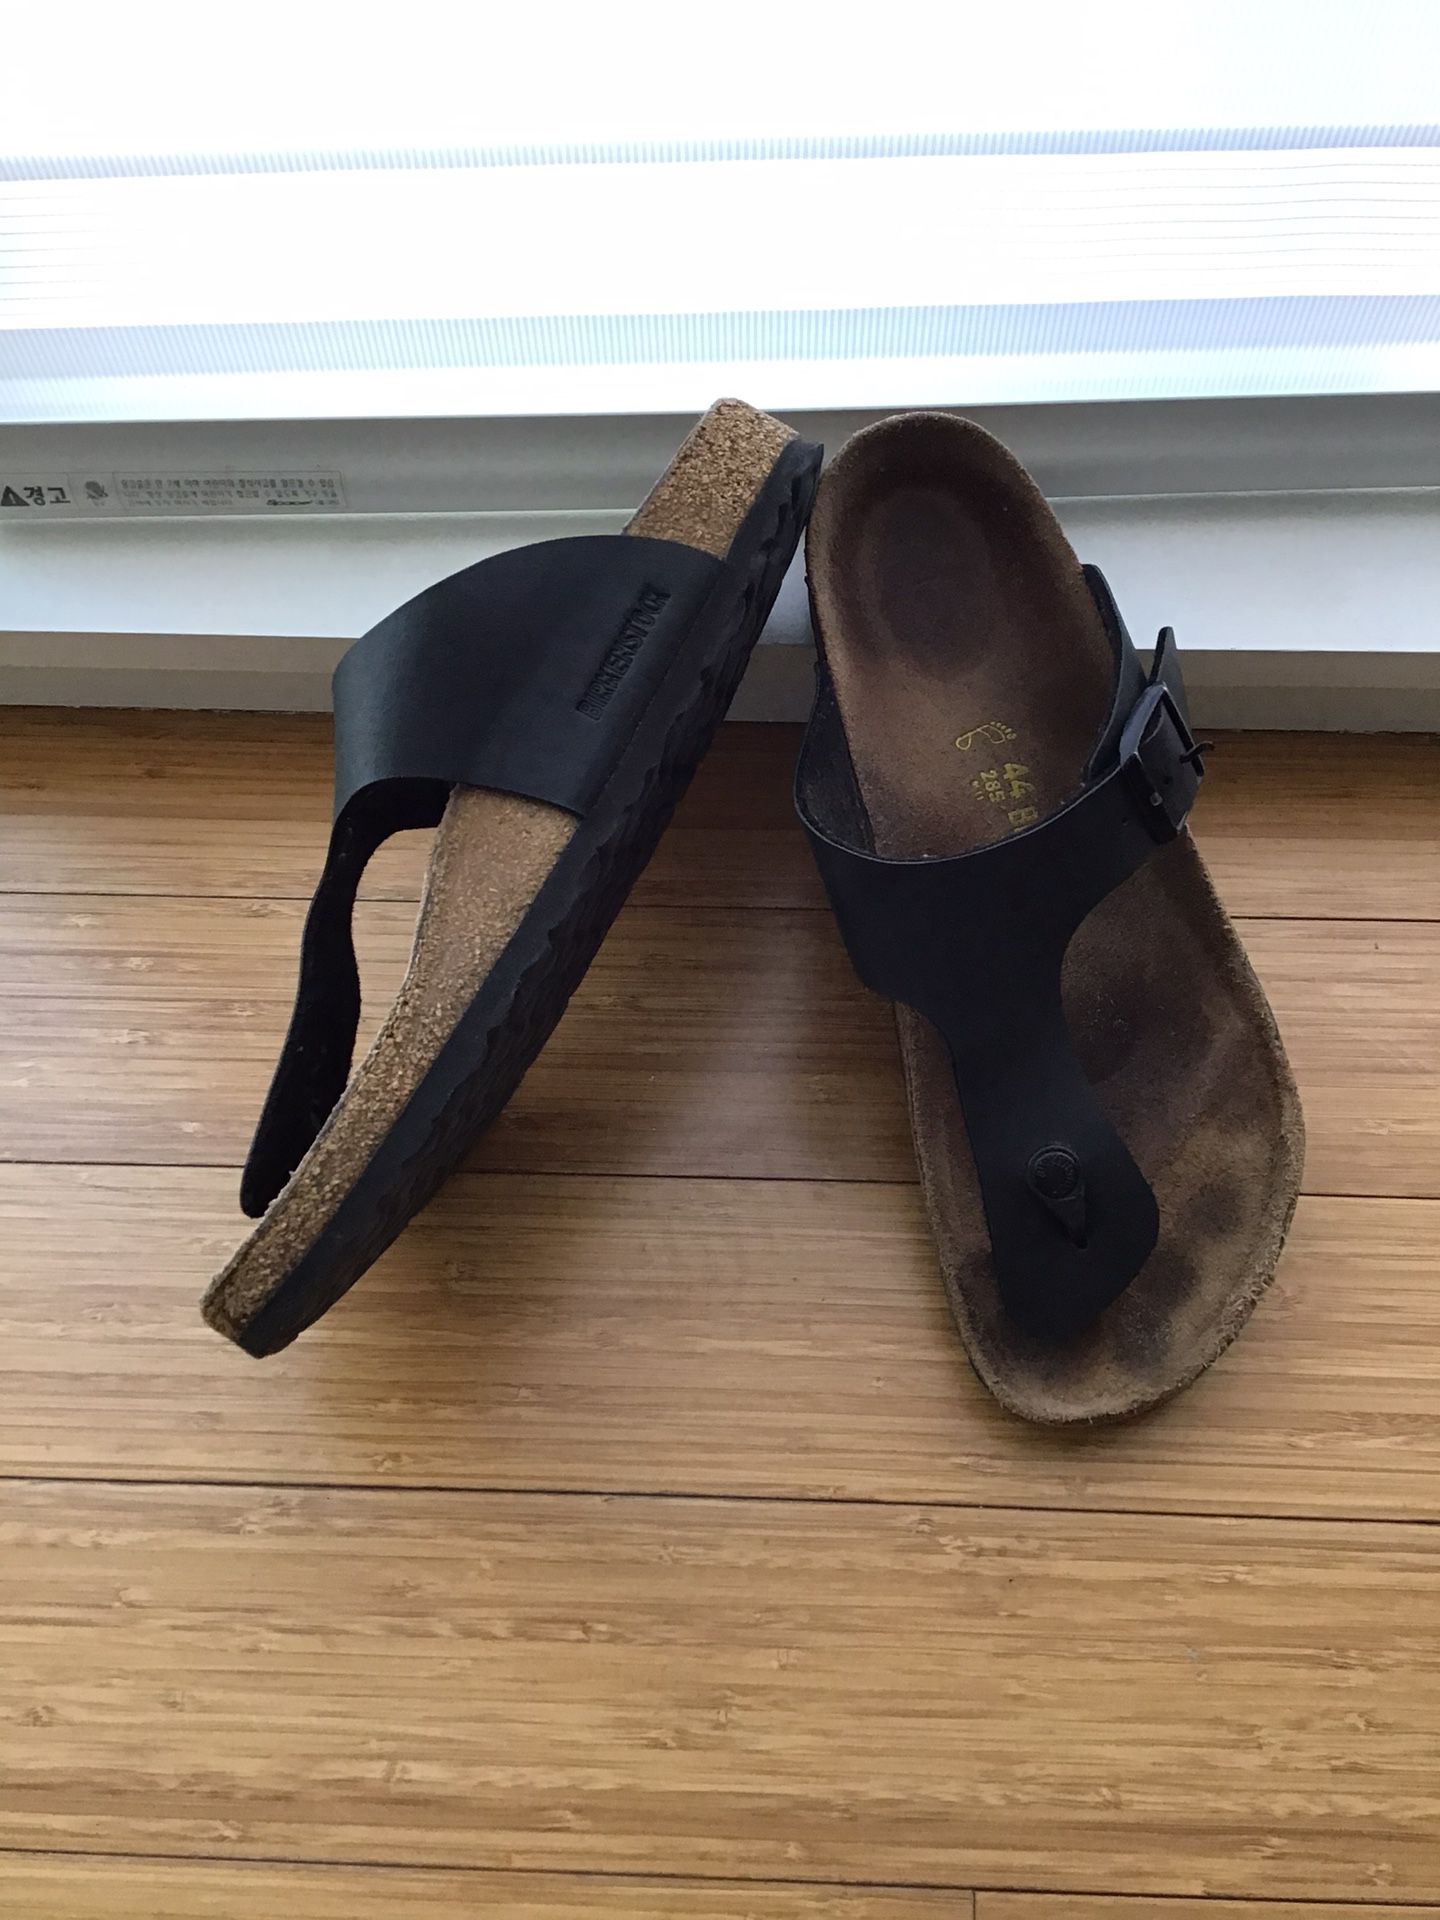 Birkenstock sandals size 44 Mens size 11-11.5